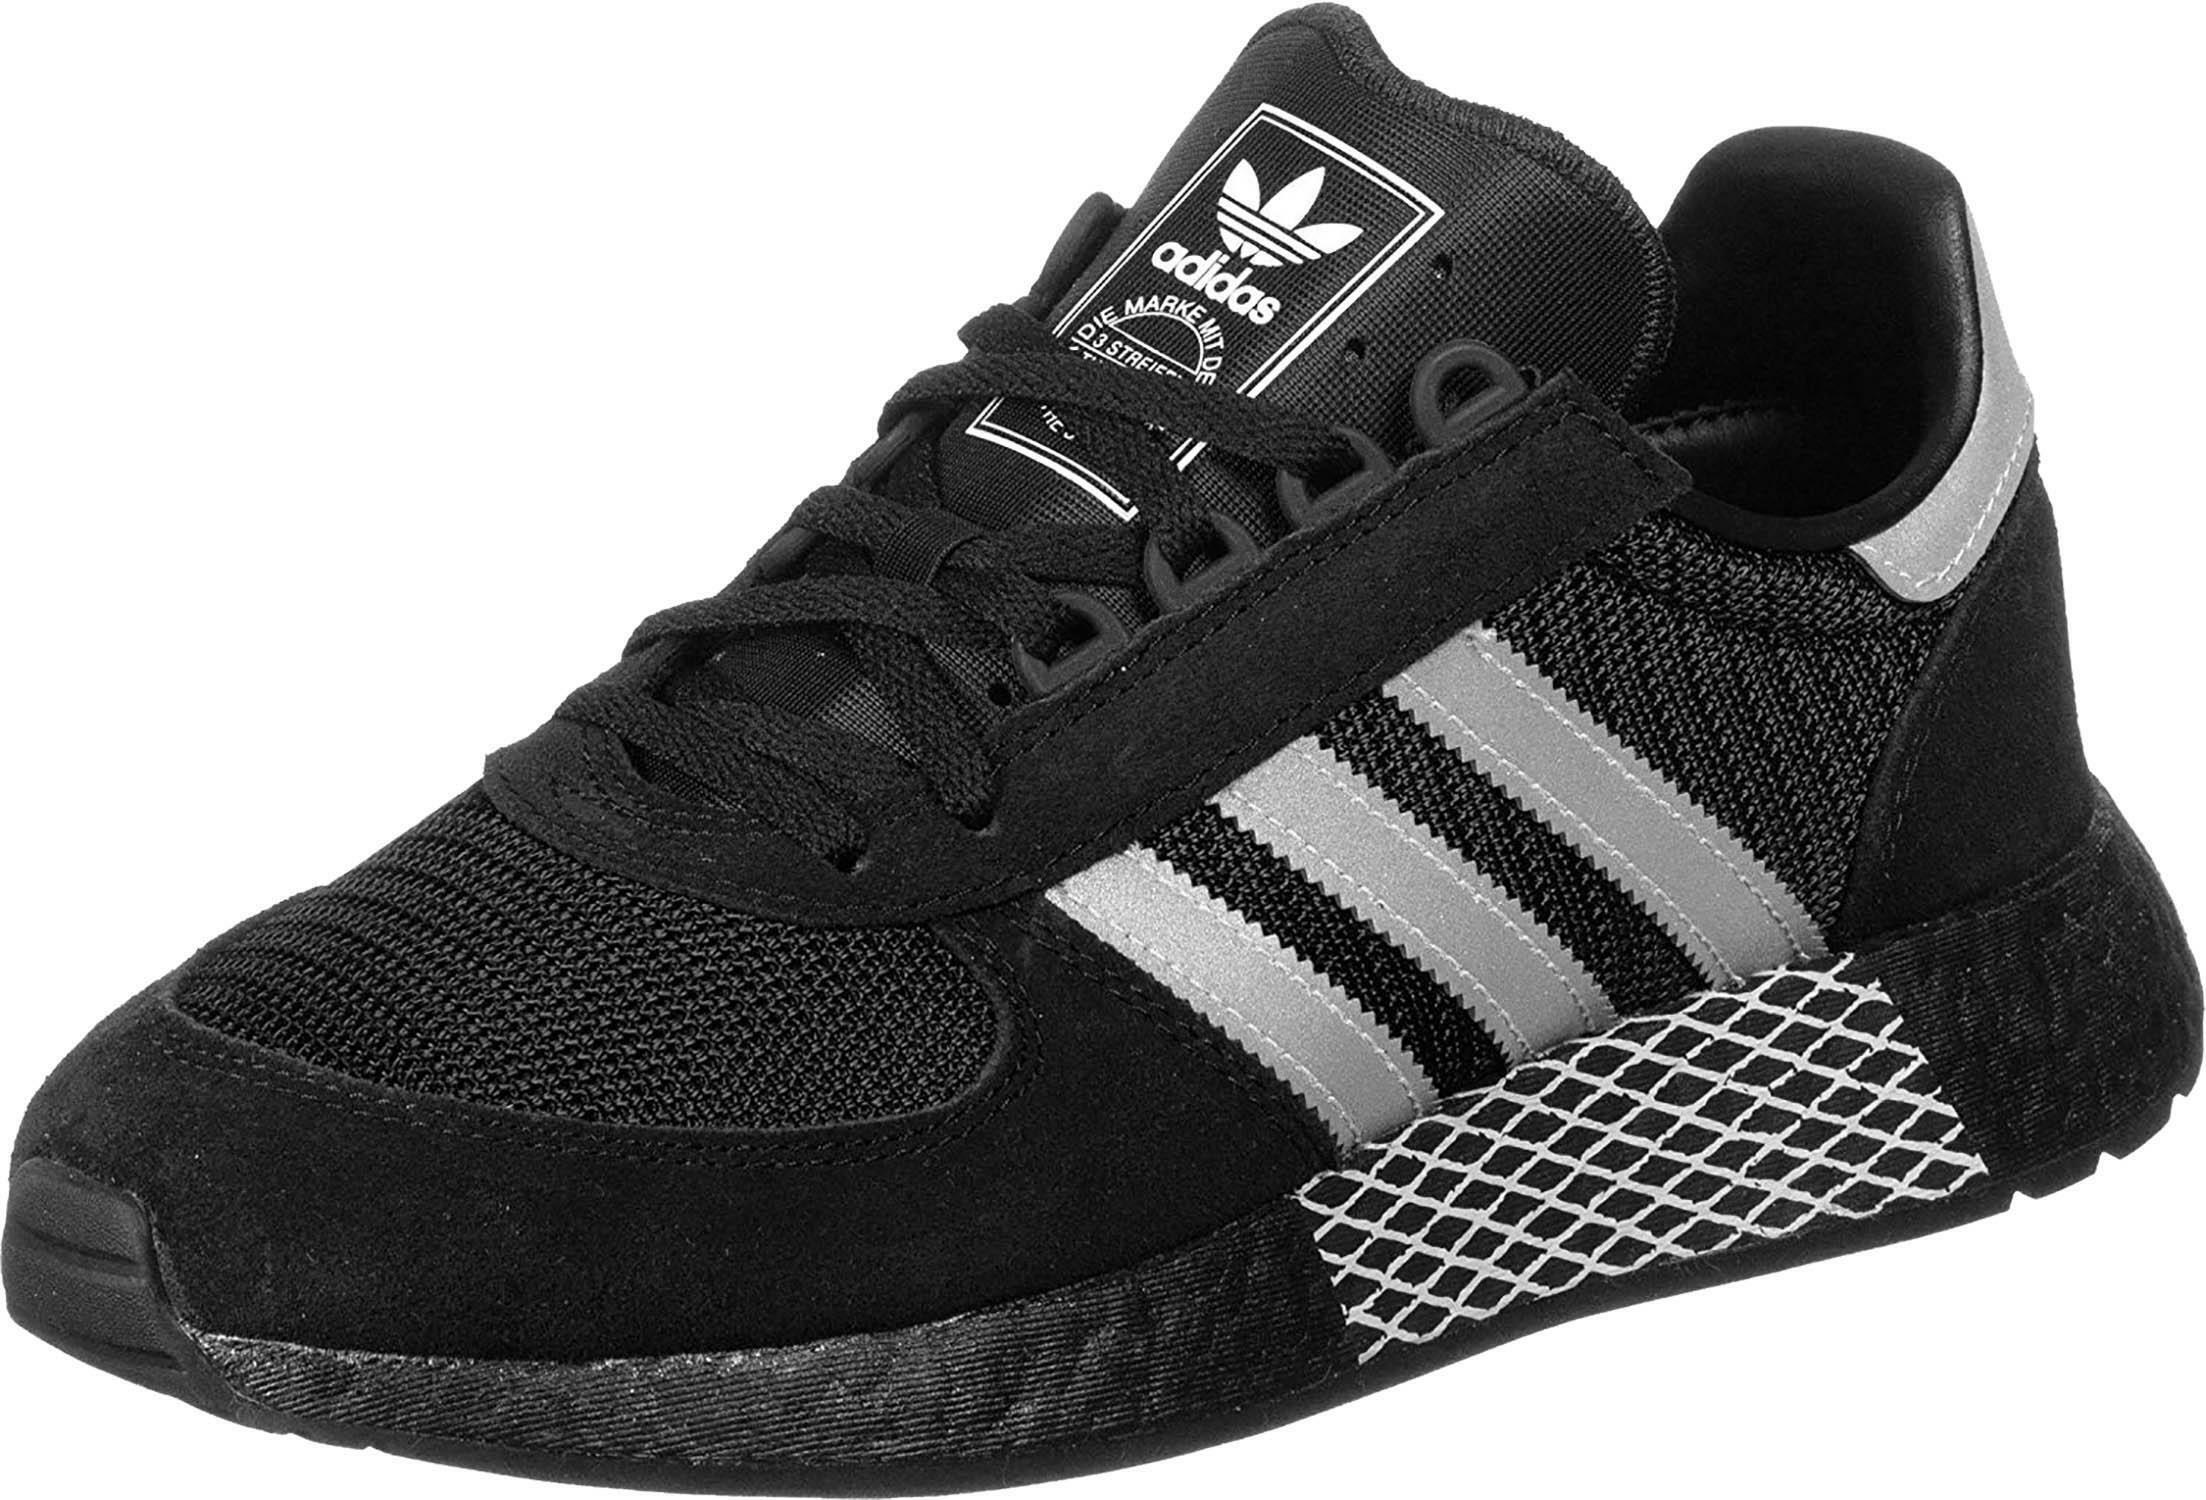 Adidas marathon tech scarpe sportive uomo nere ef4398